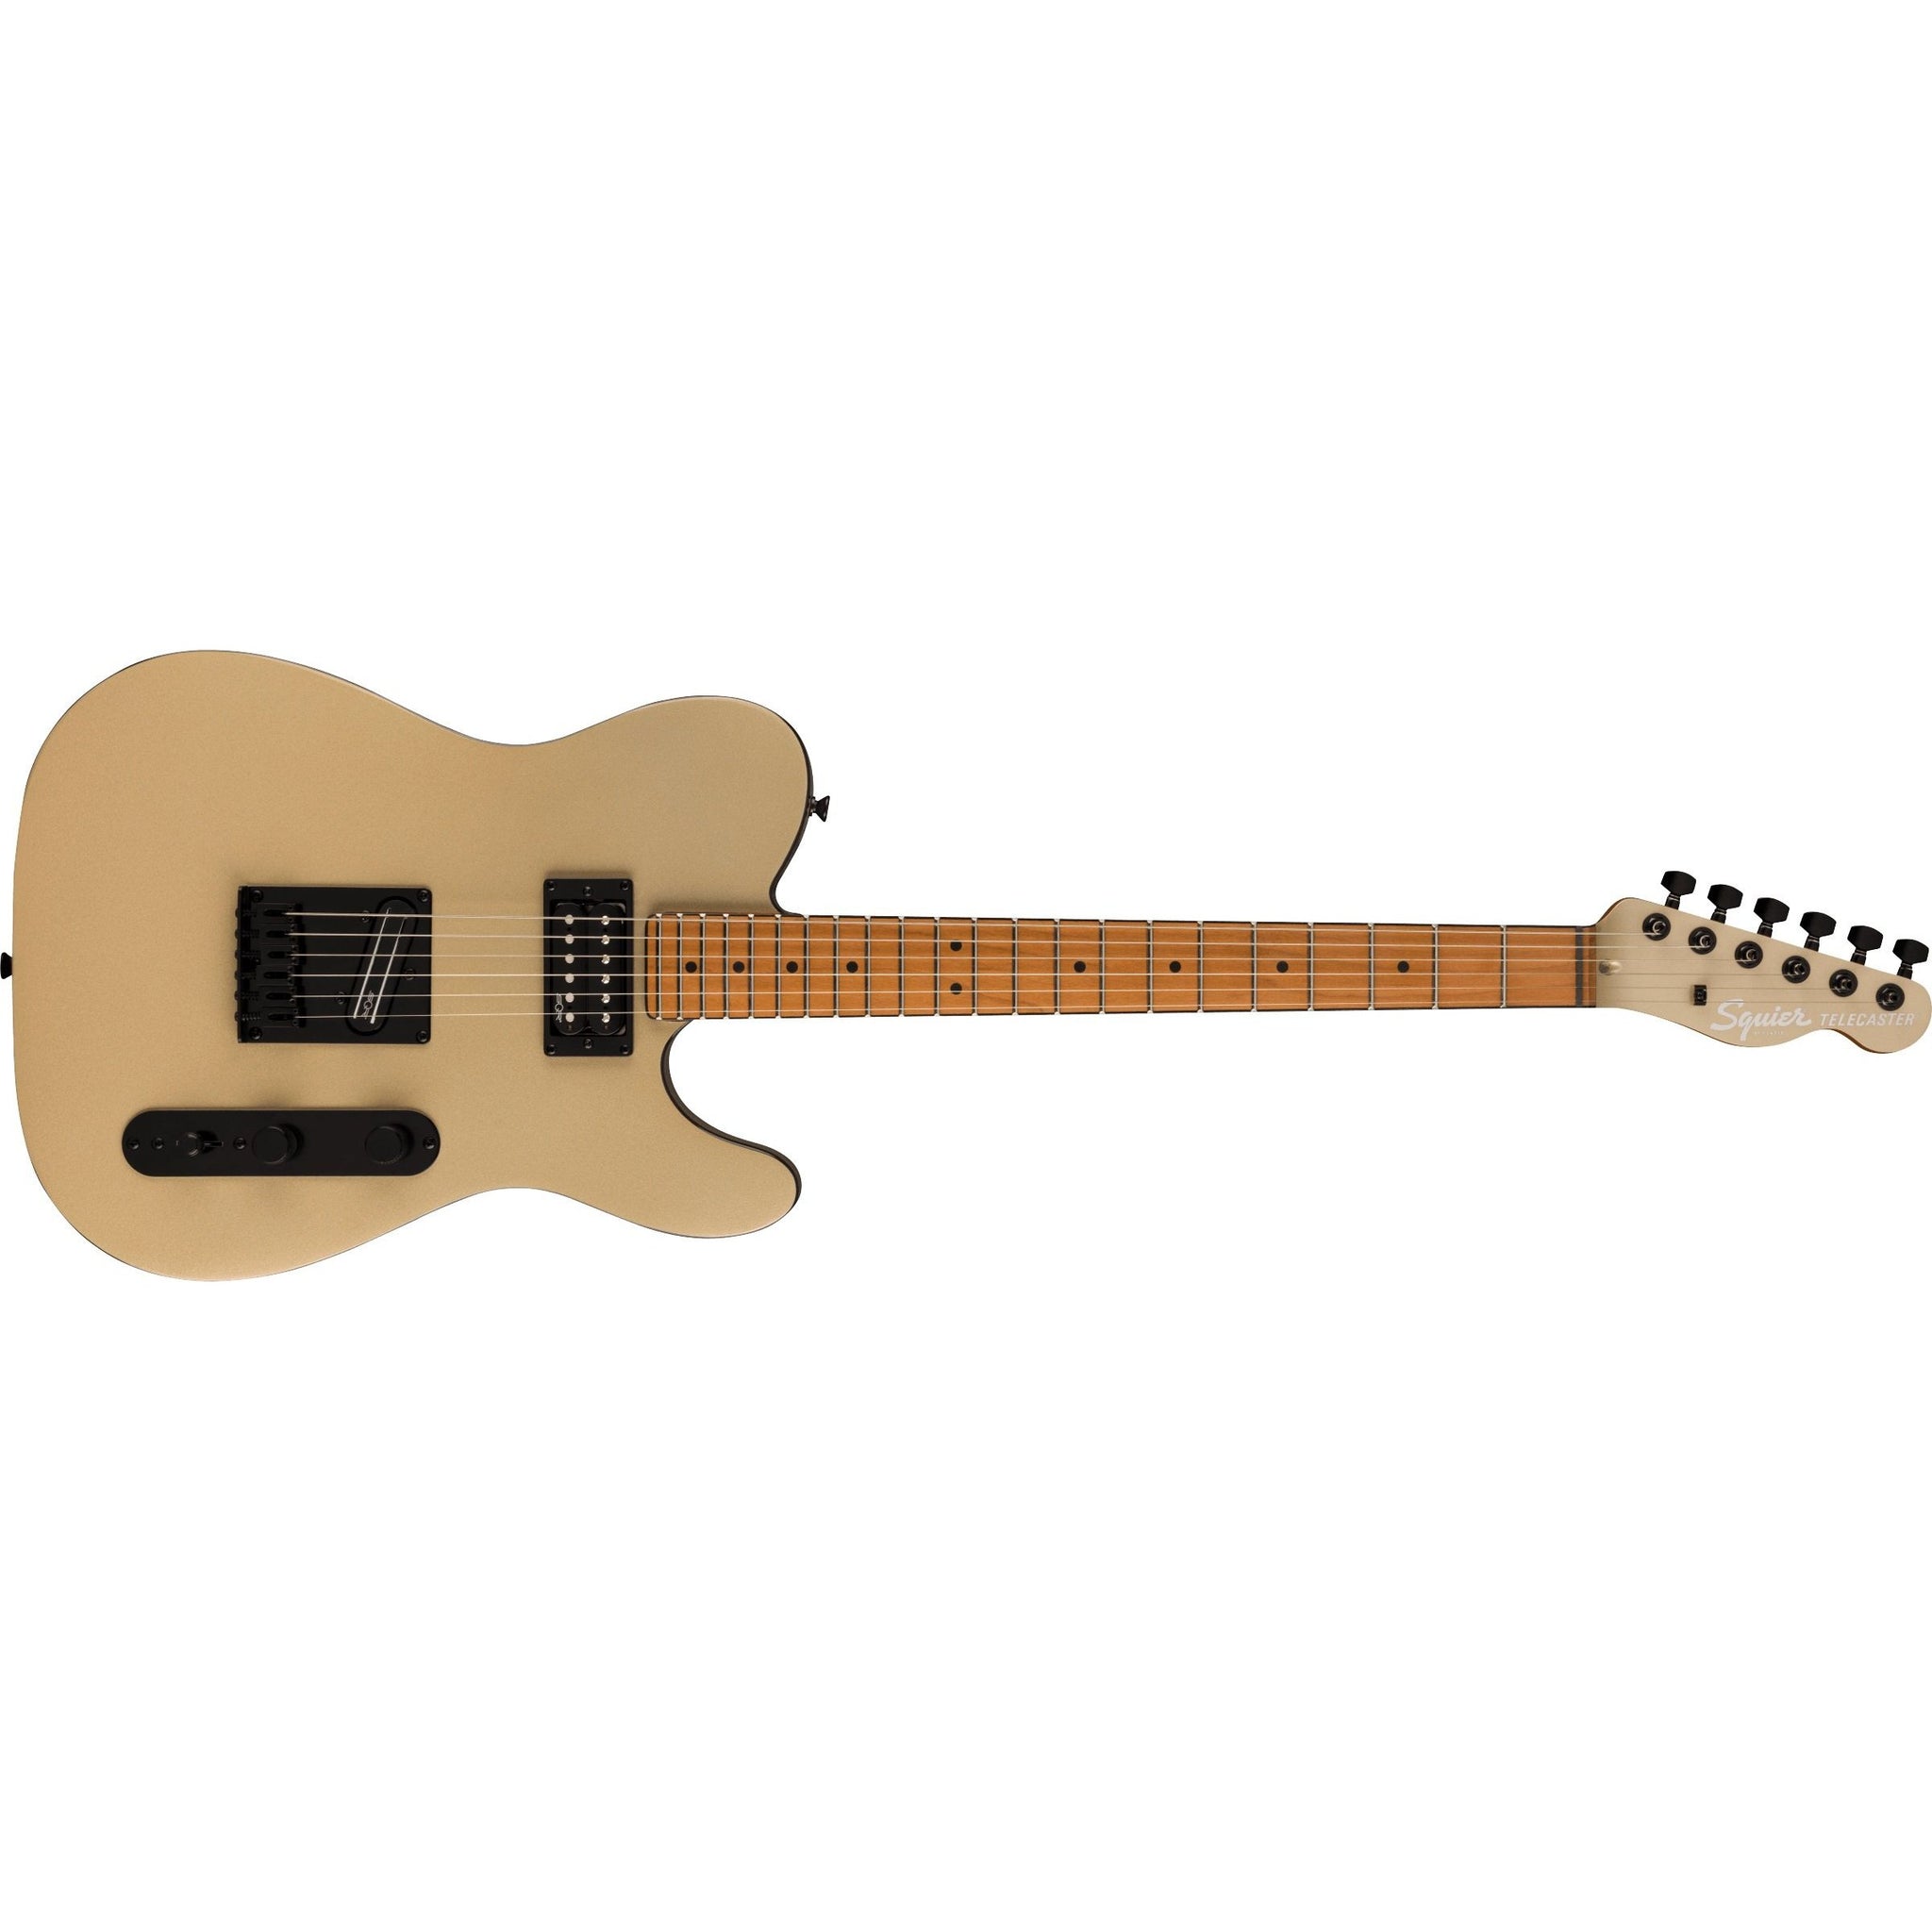 Fender Squier Contemporary Telecaster RH Electric Guitar-Shoreline Gold-Music World Academy